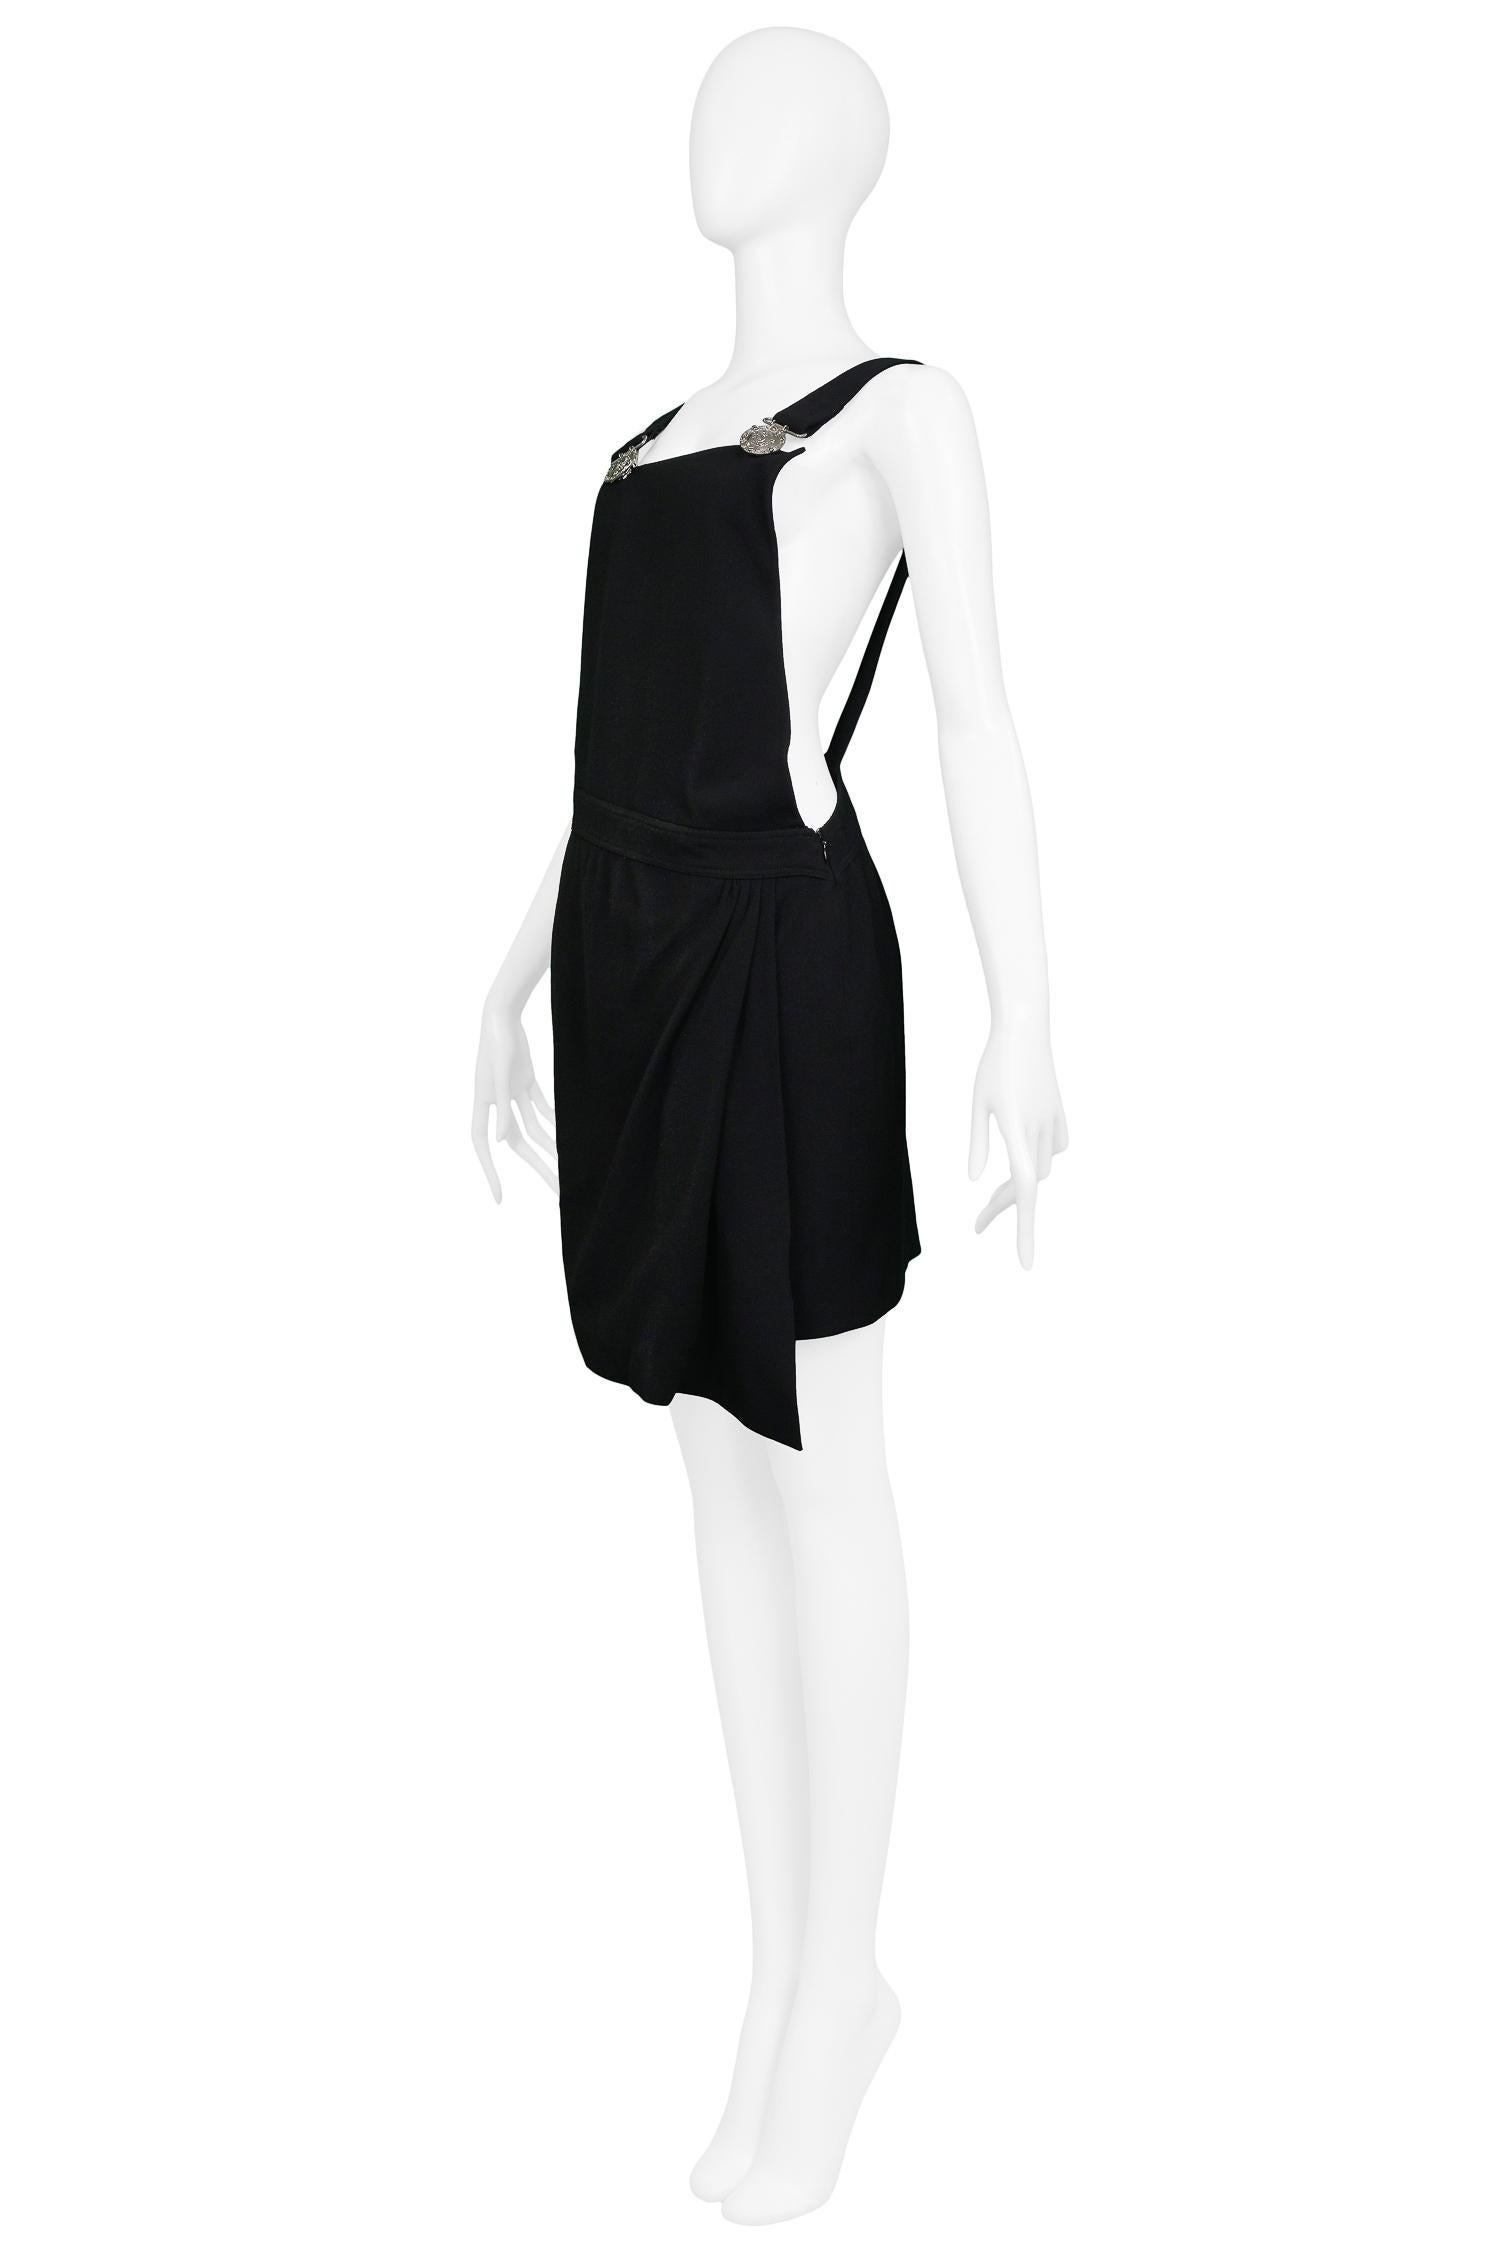 Women's Vintage Gianni Versace 1994 Black Wool Asymmetrical Jumper Dress